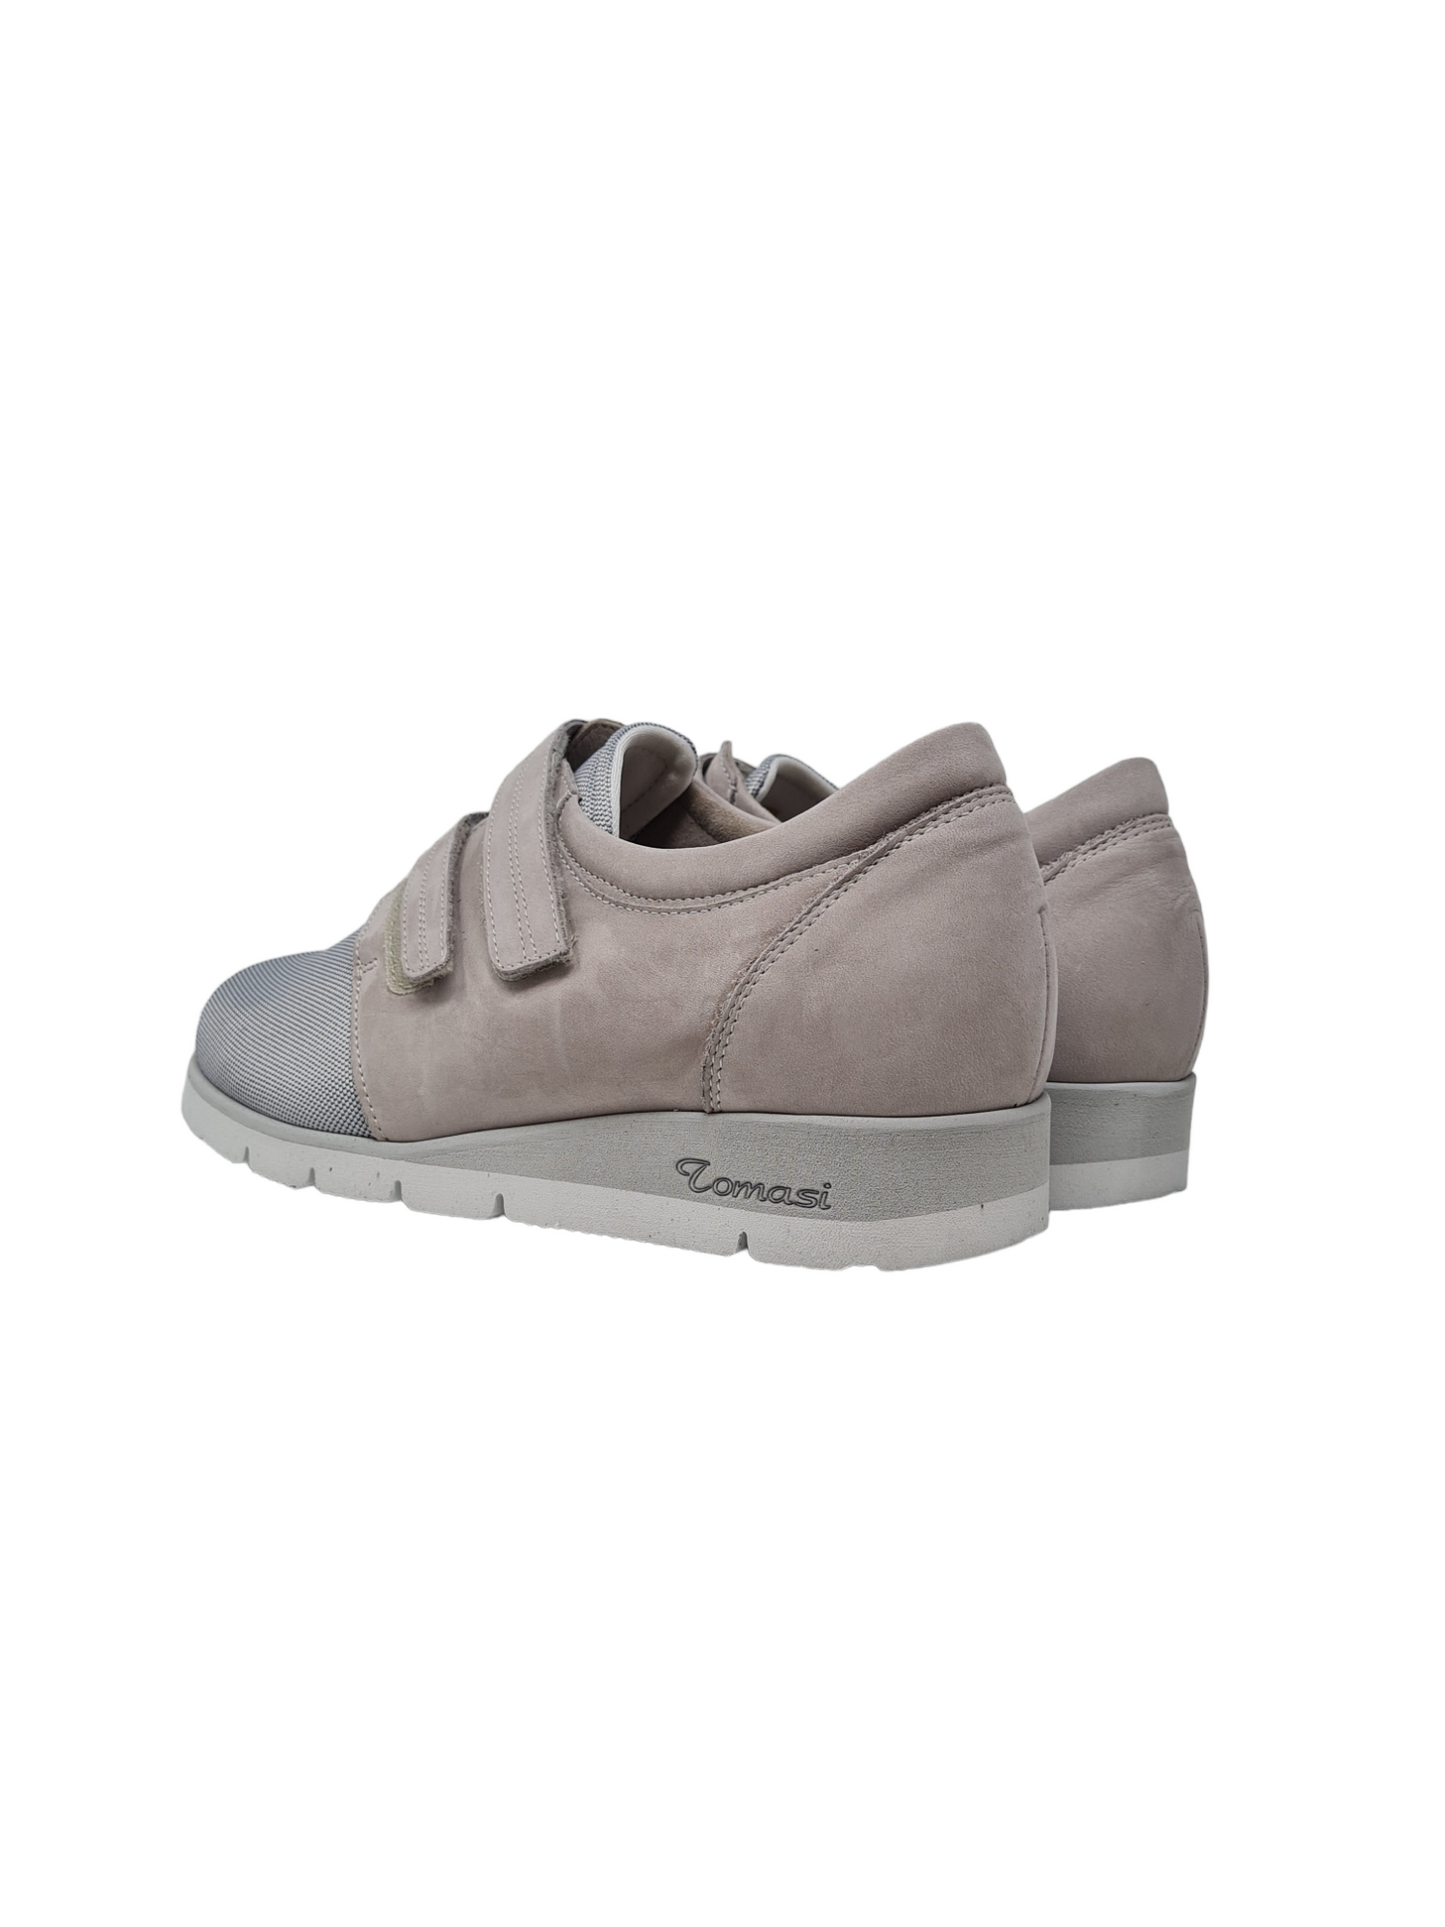 GINESTRA comfort shoe